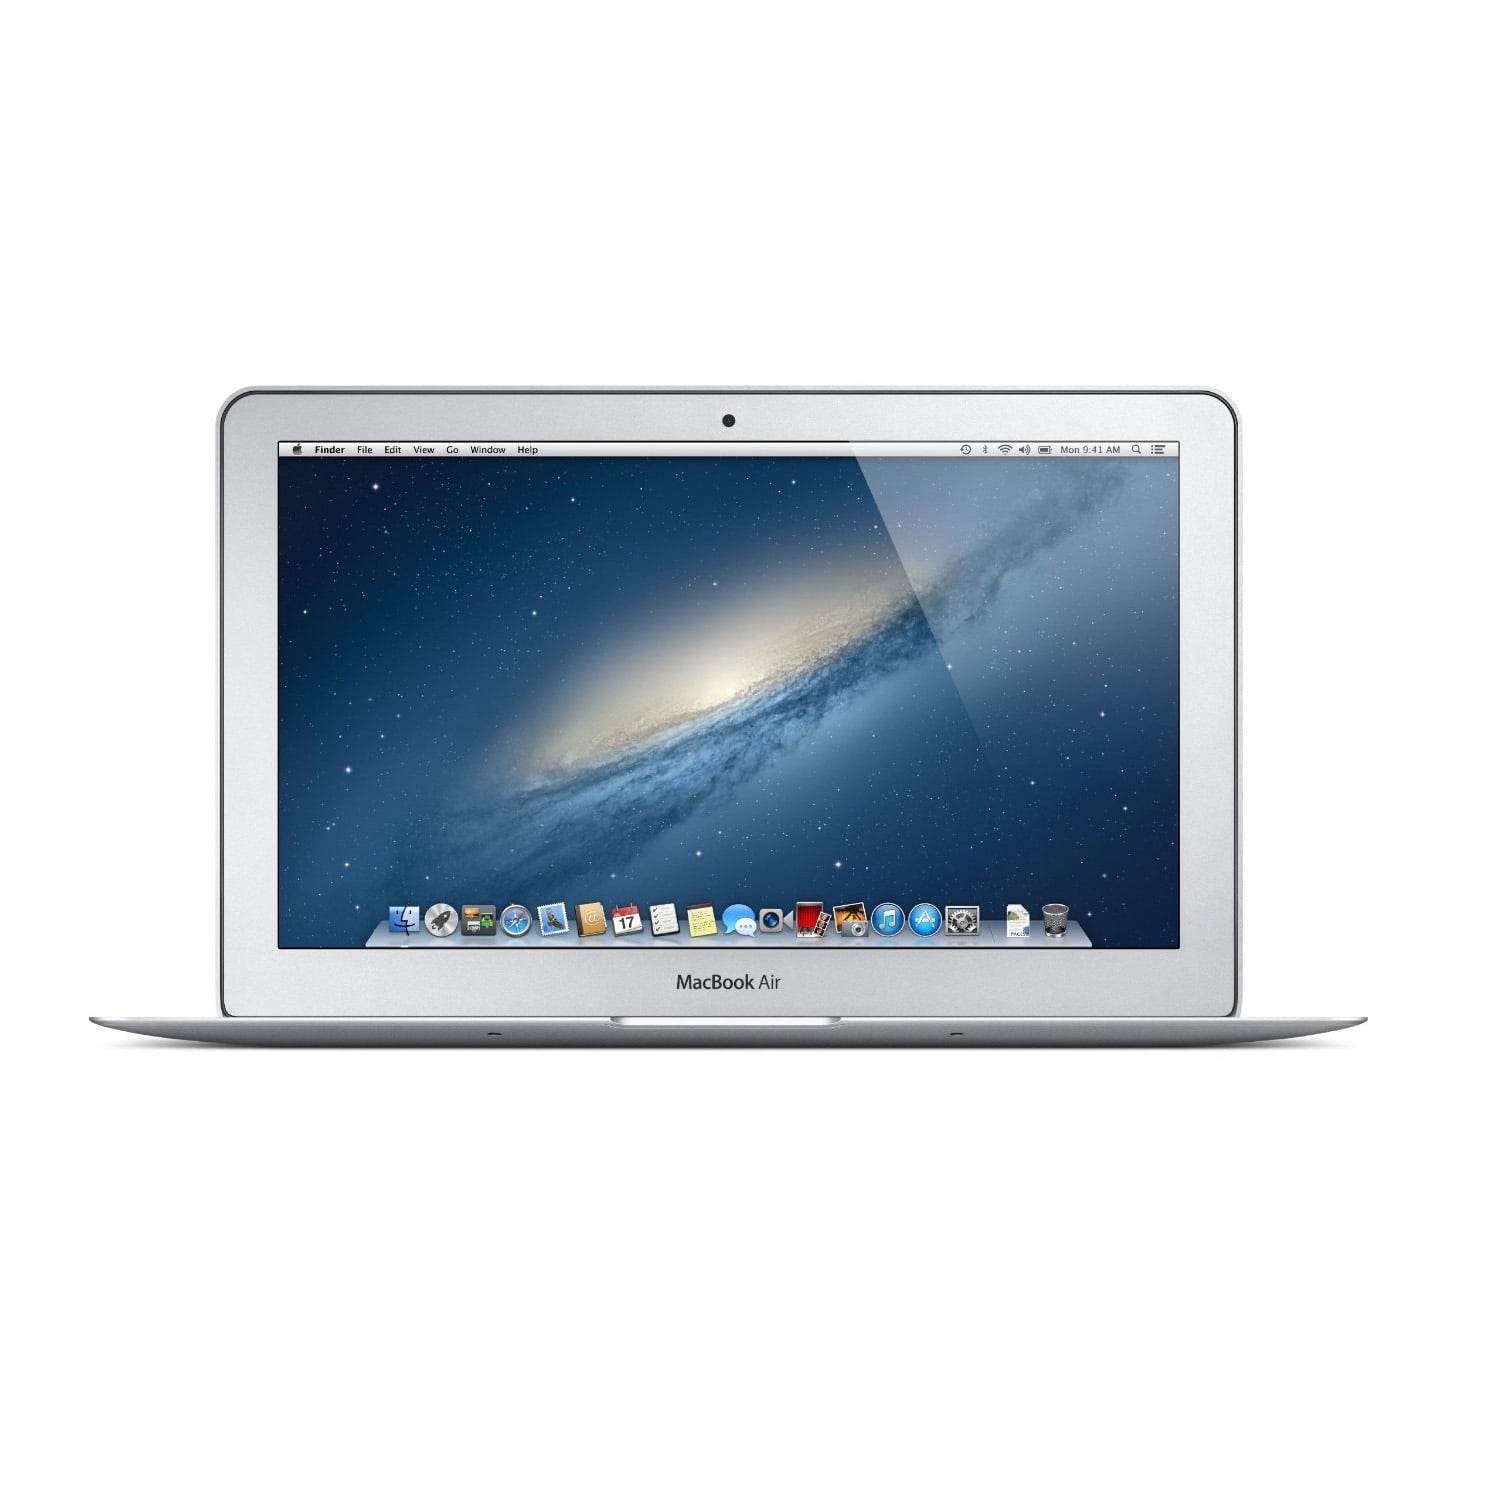 Refurbished Apple MacBook Air 11.6 Laptop Intel Core i5-4260U 1.4GHz 4GB 128GB SSD MD711LLB